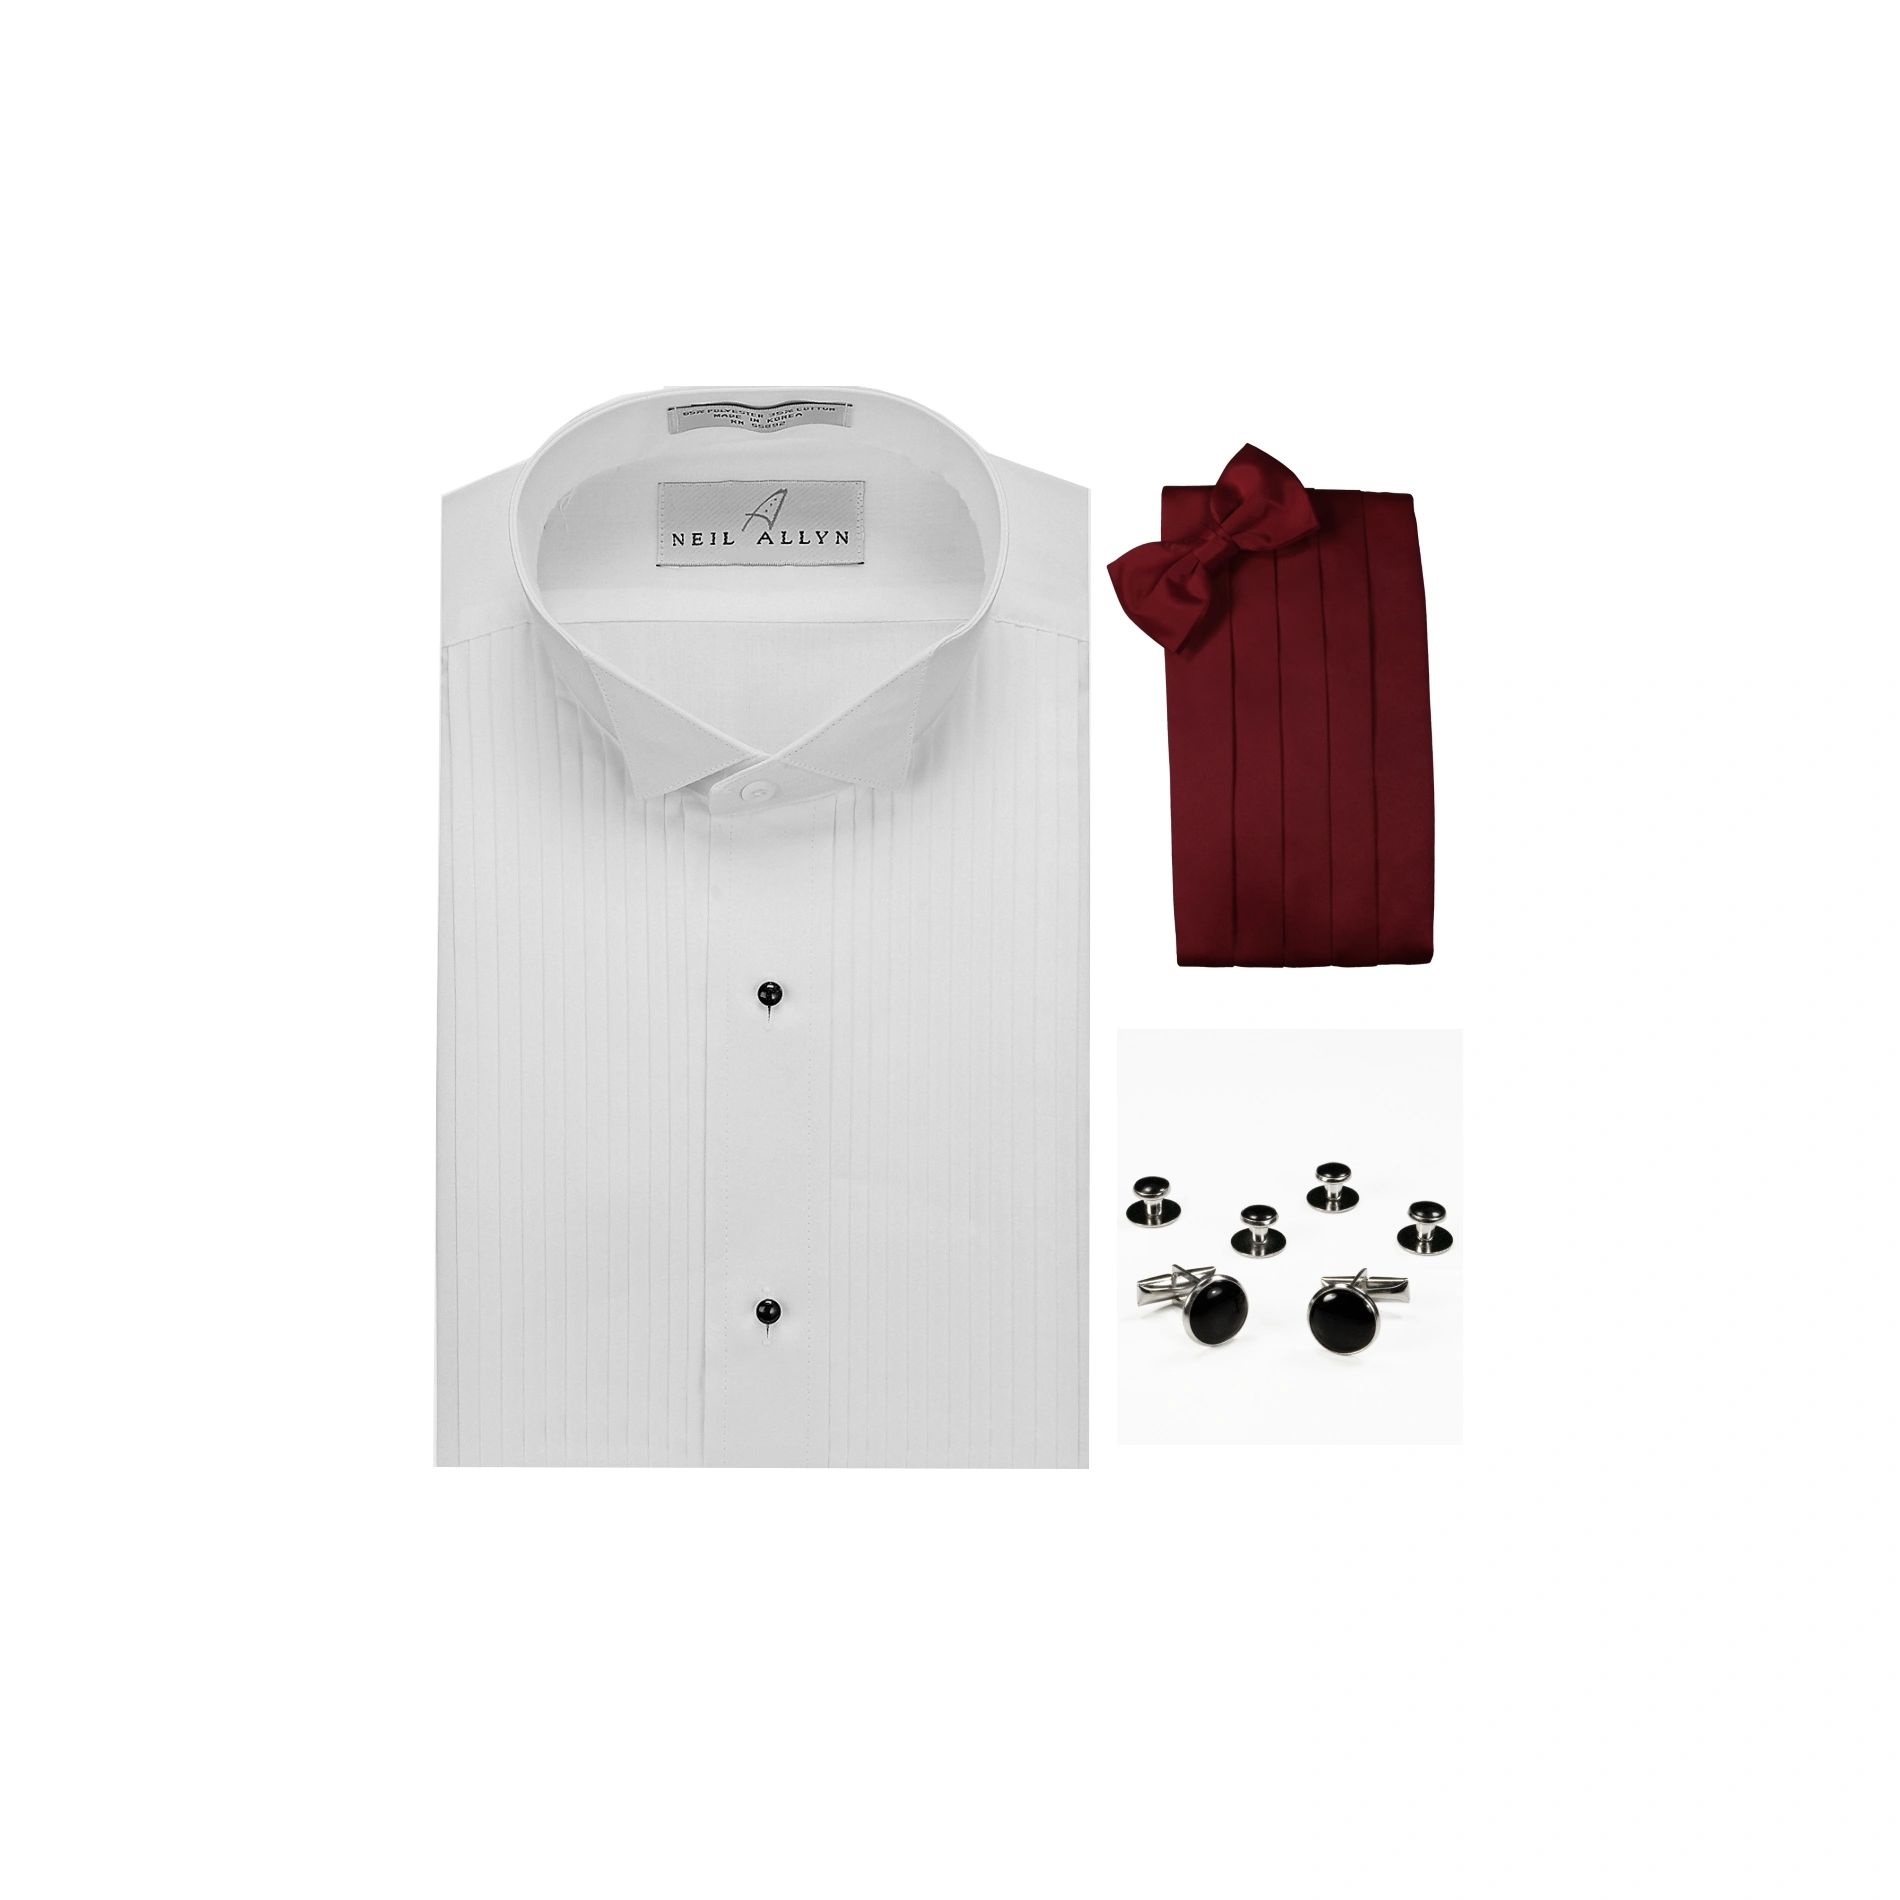 Neil Allyn Wing Collar 1/4" Pleats Formal Tuxedo Shirt, Burgundy Cummerbund, Bow-Tie, Cuff Links & Studs Set